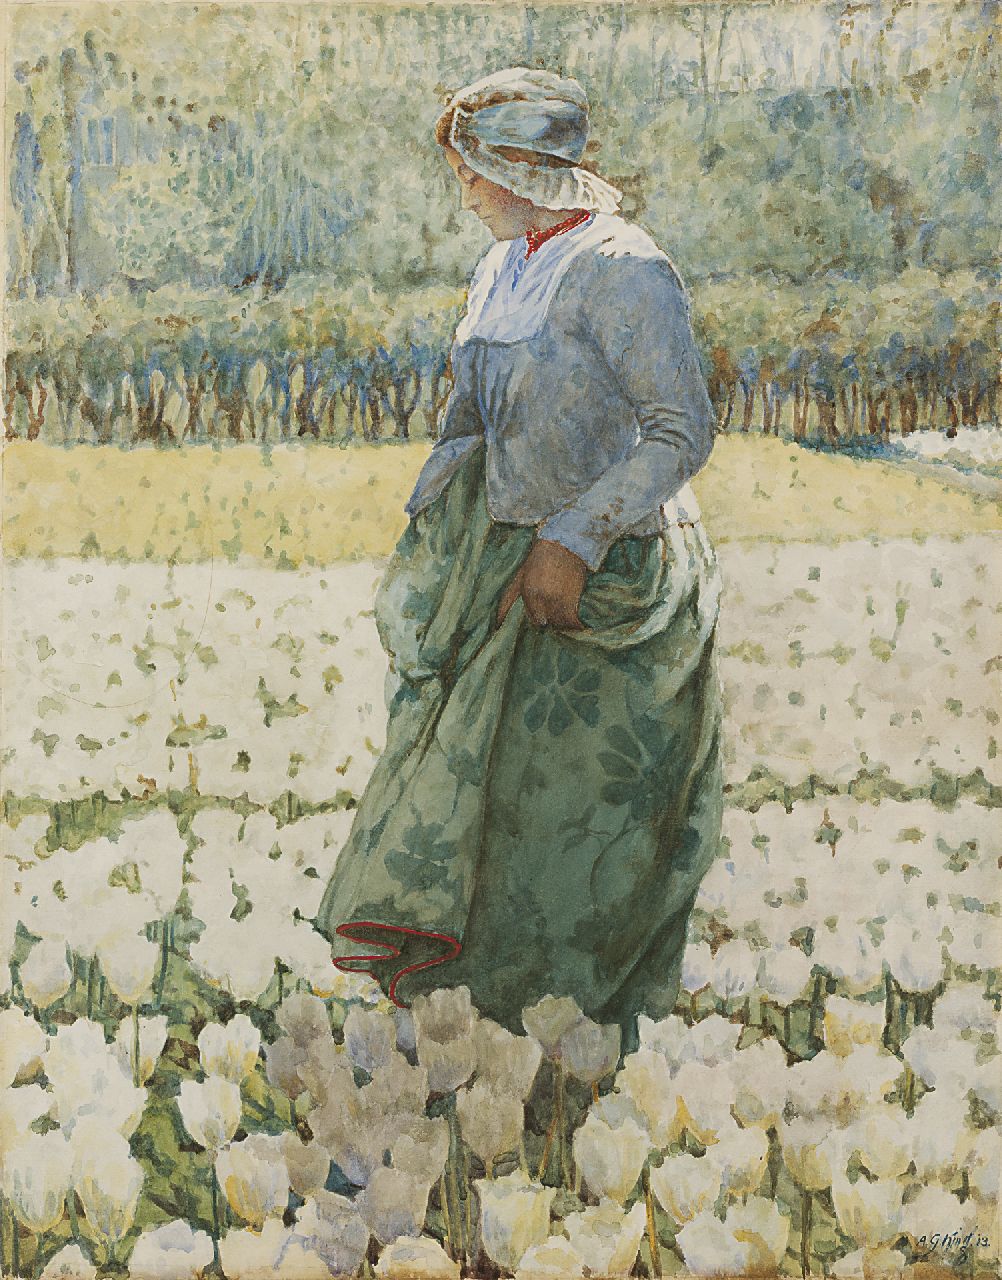 Agnes Gardner King | In het tulpenveld, aquarel op papier, 47,4 x 37,3 cm, gesigneerd r.o. en gedateerd '13